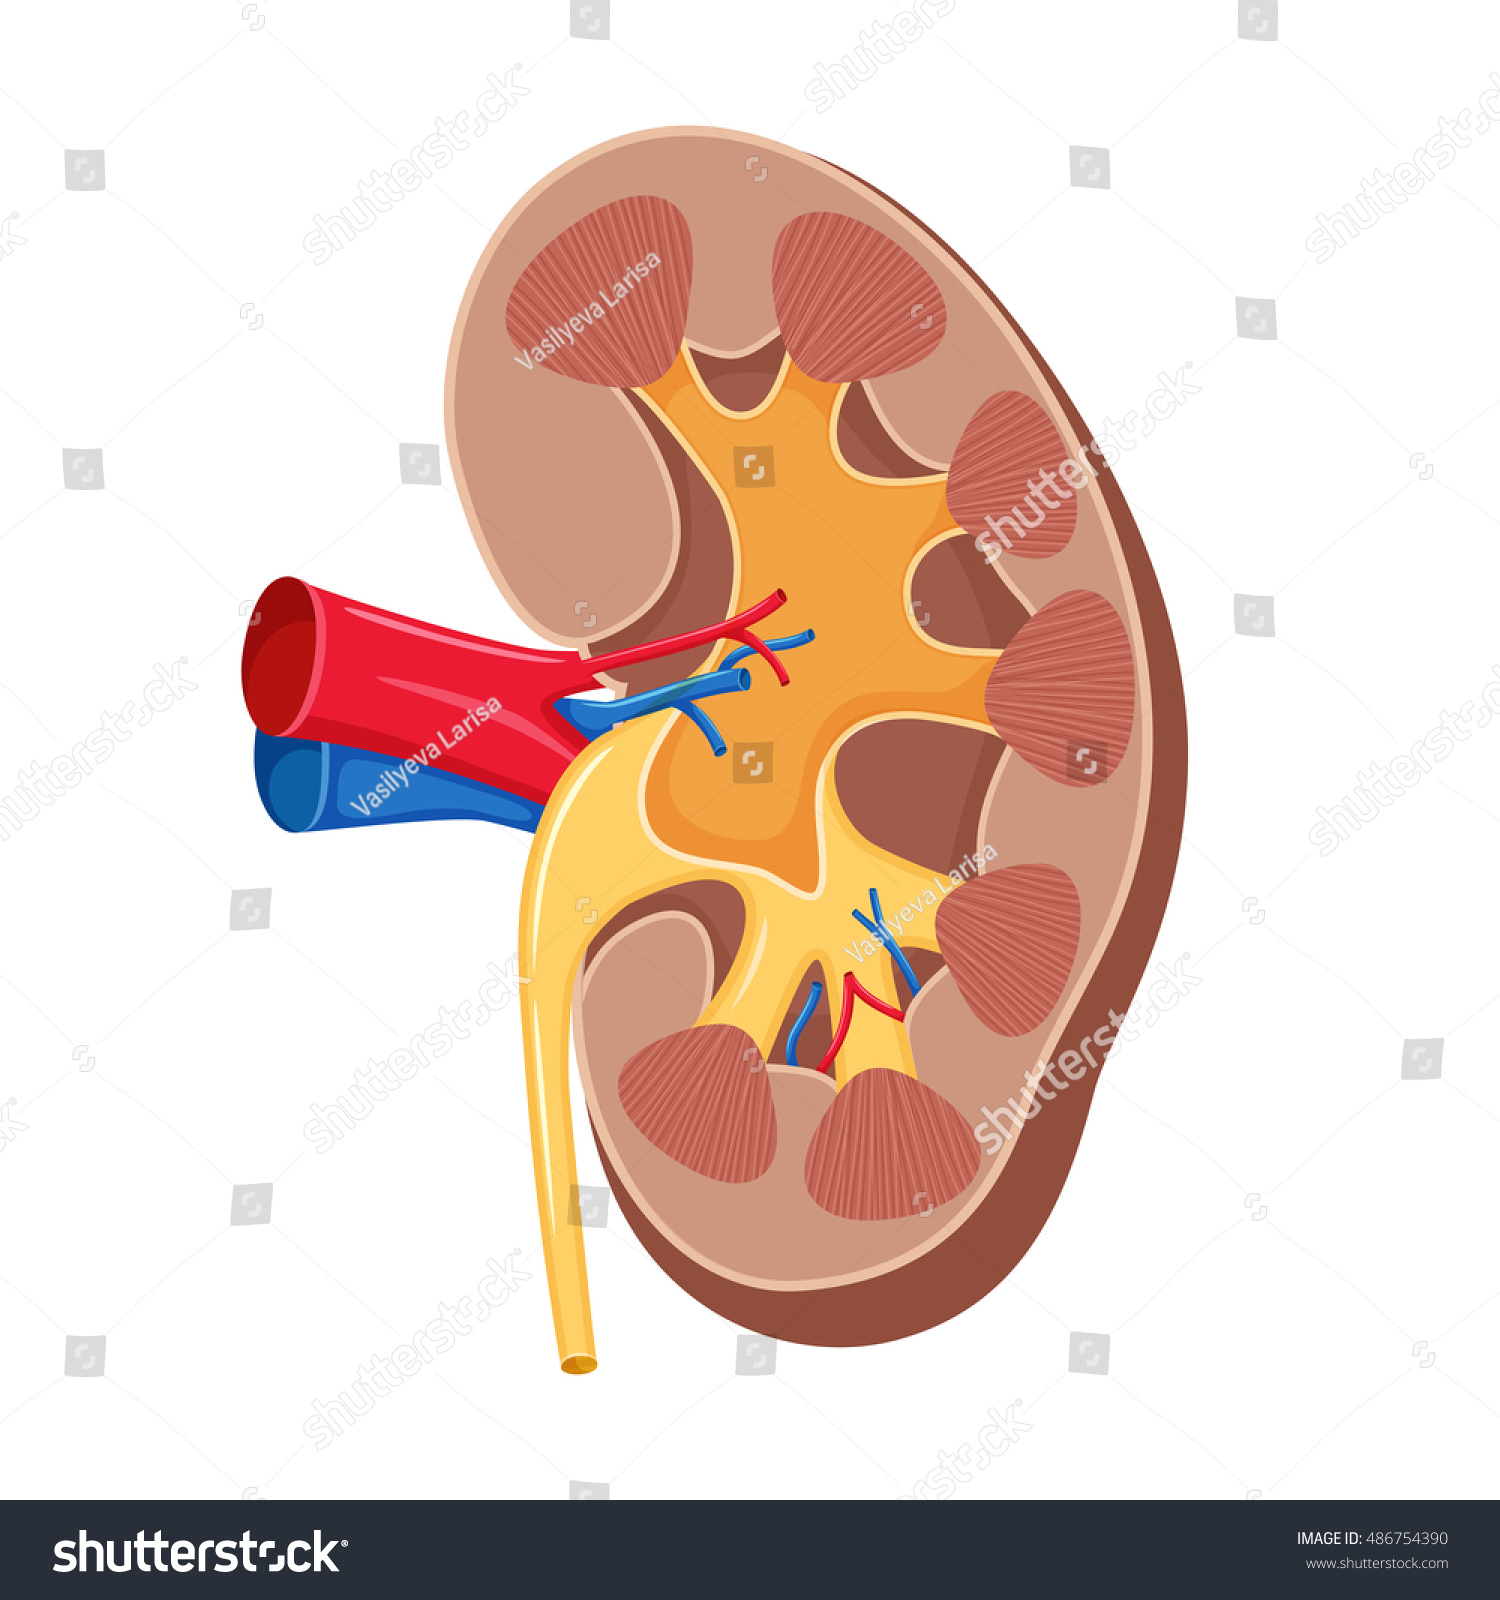 Human Kidney Anatomy Medical Science Vector Stock Illustration 486754390